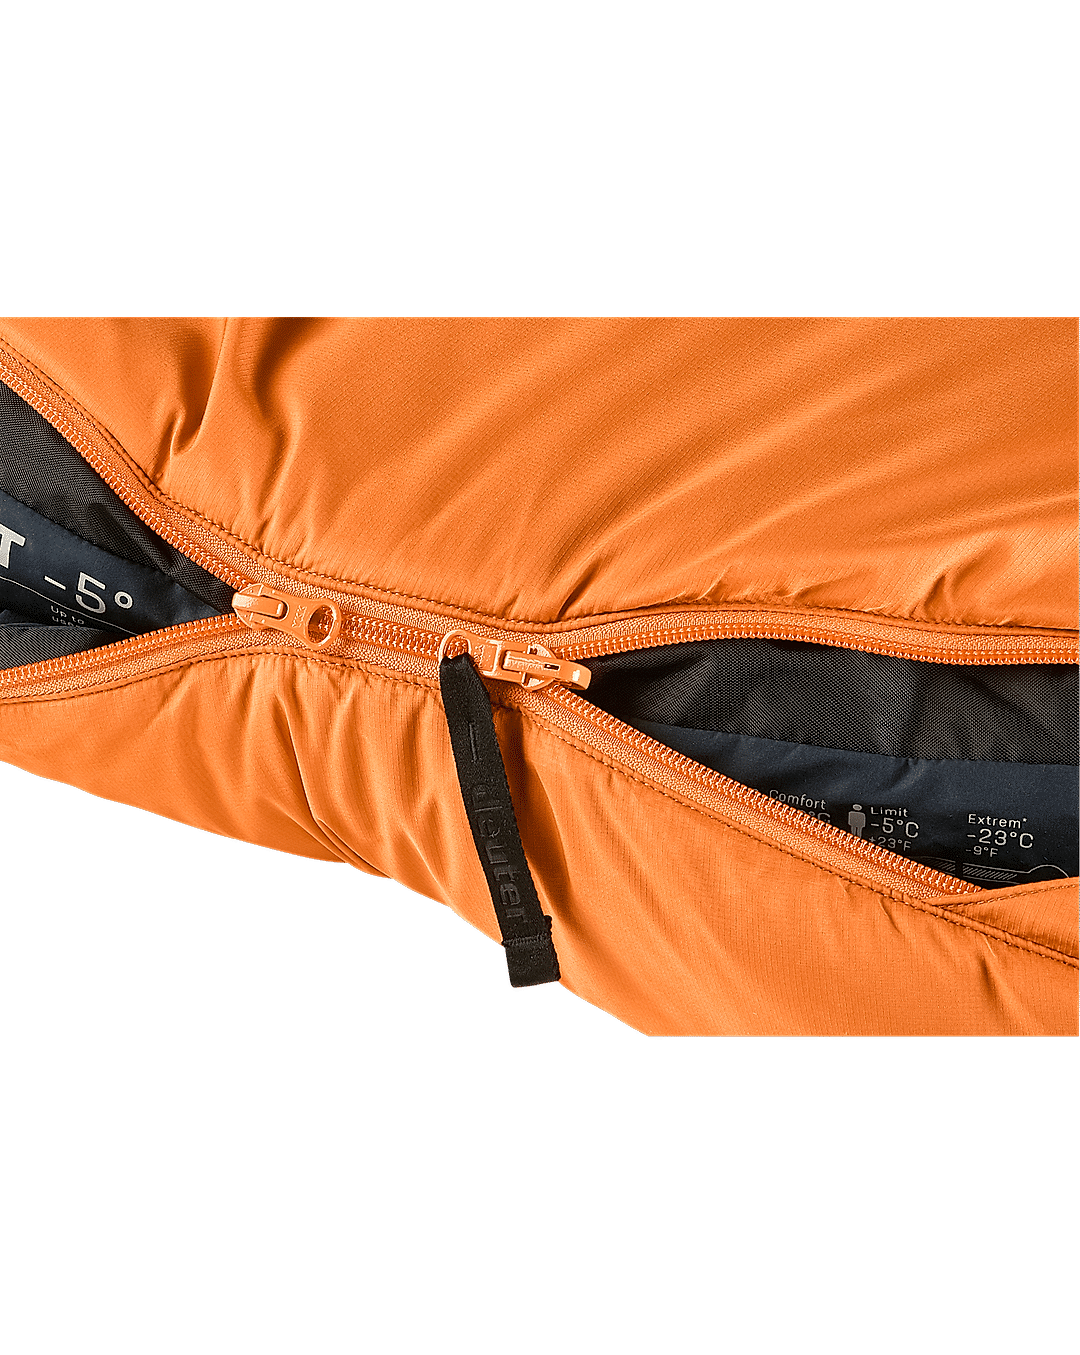 Deuter Unisex Orange Orbit -5° Sleeping Bag